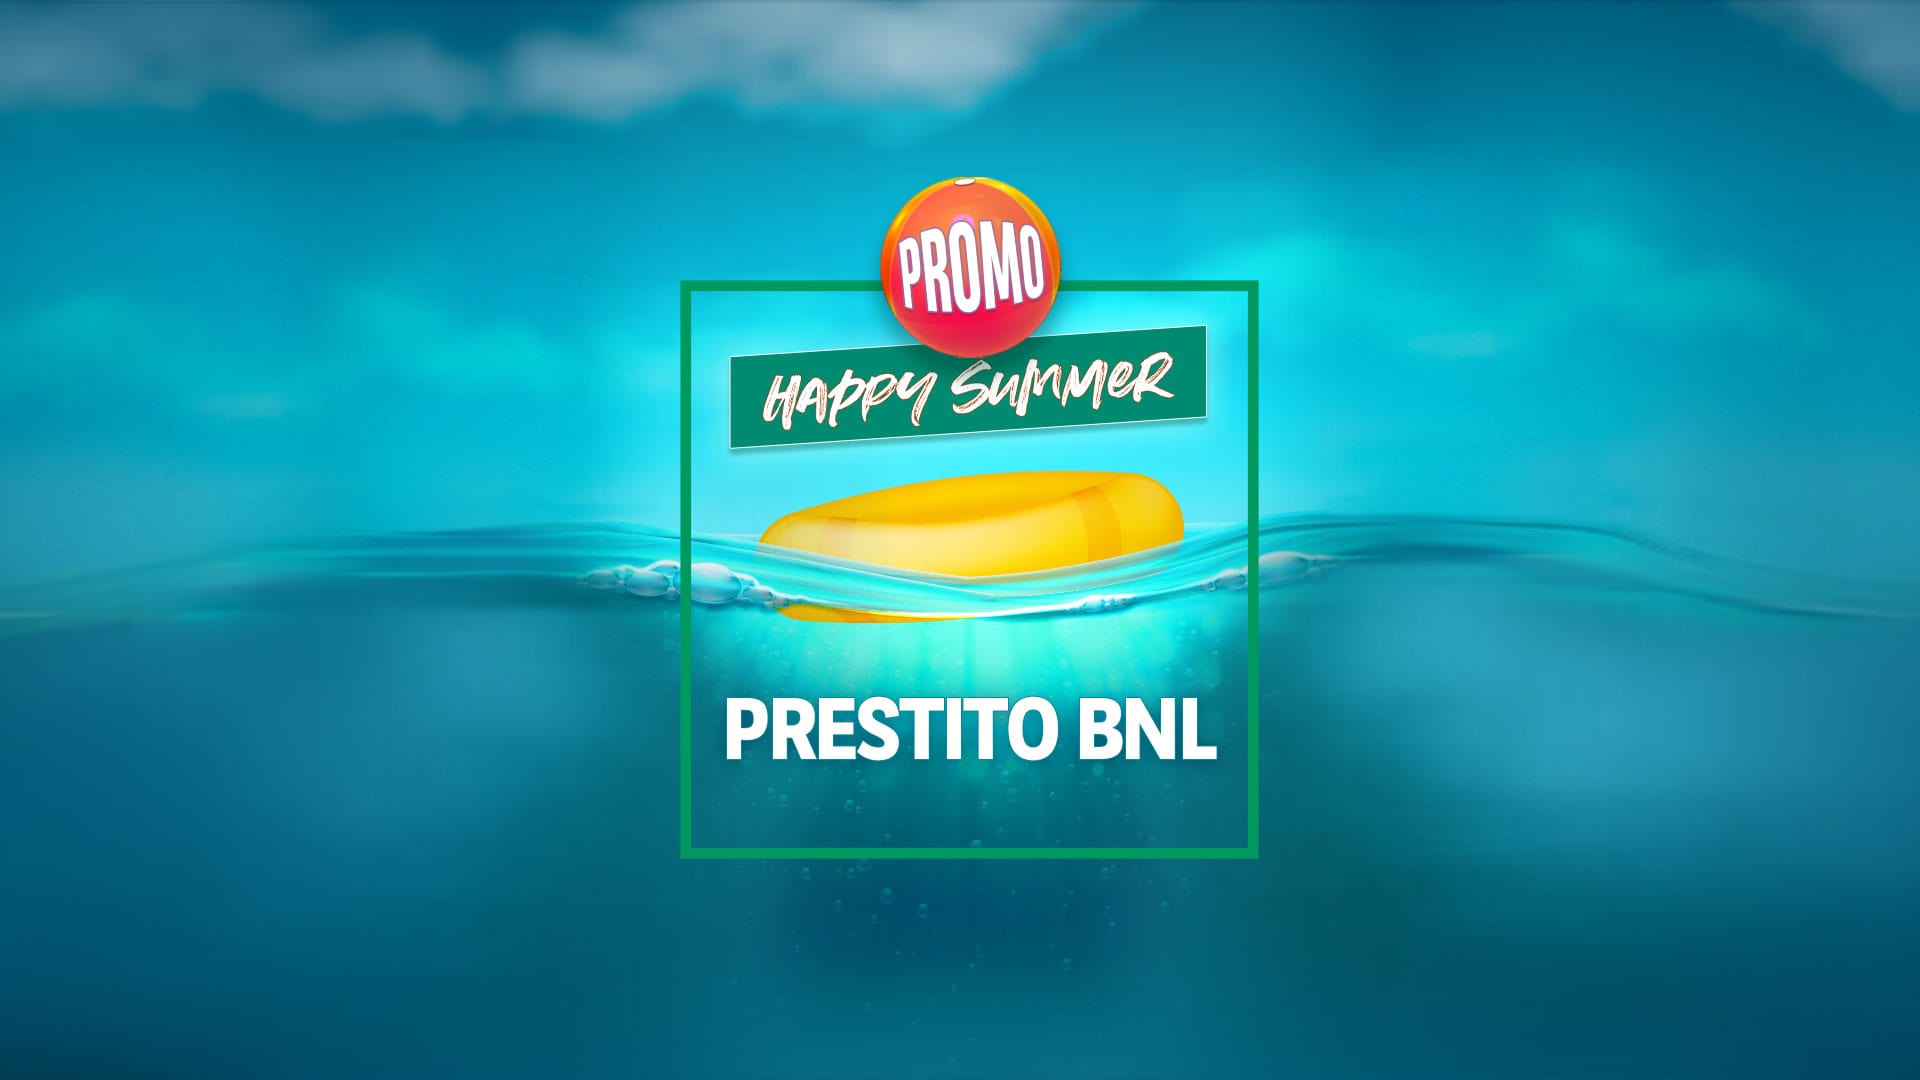 Promo - Happy Summer - Prestiti BNL